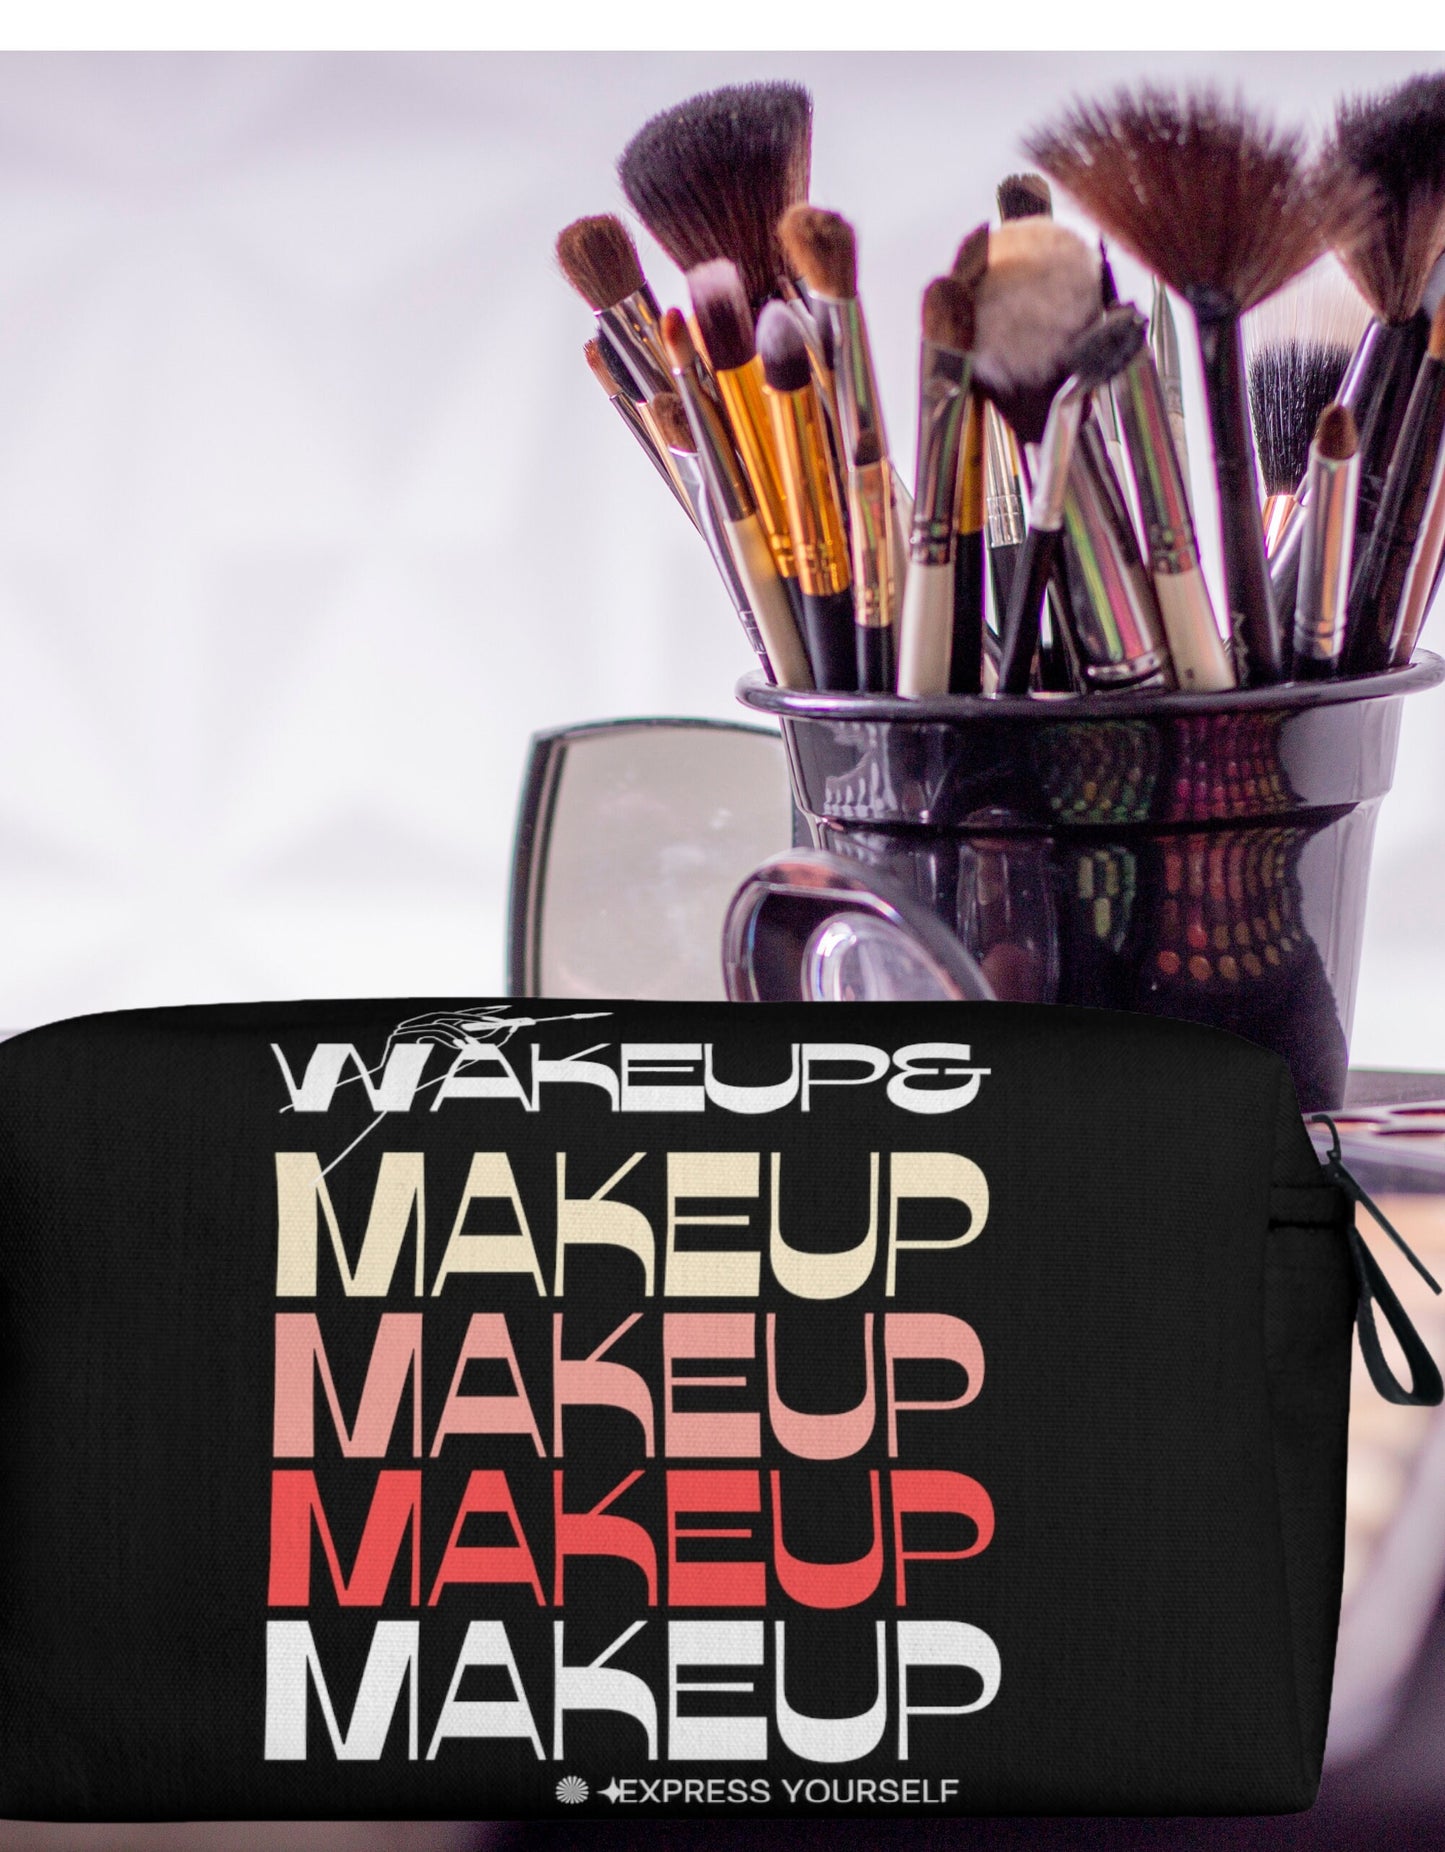 Makeup Bag Pro Artist Makeup Brush Travel Organizer Bag Cosmetologist Gift Beauty School Student Grad Gift Makeup Artist Salon Wakeup Makeup